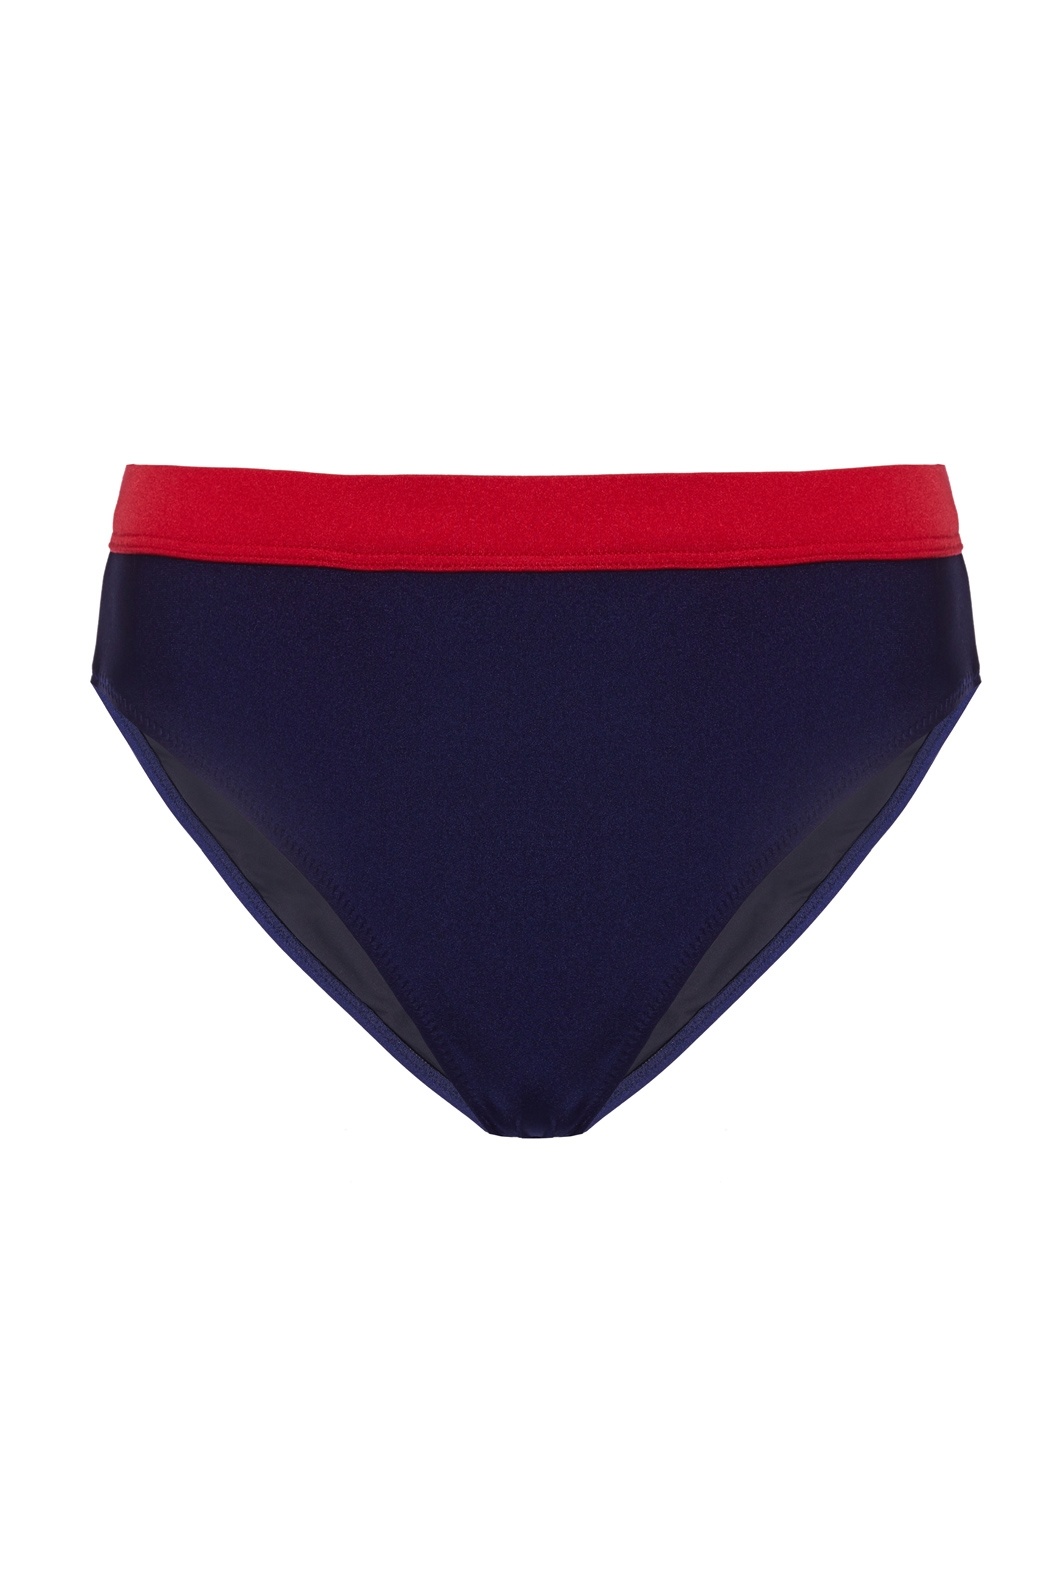 L'urv On Target Bikini Bottom - Navy Red